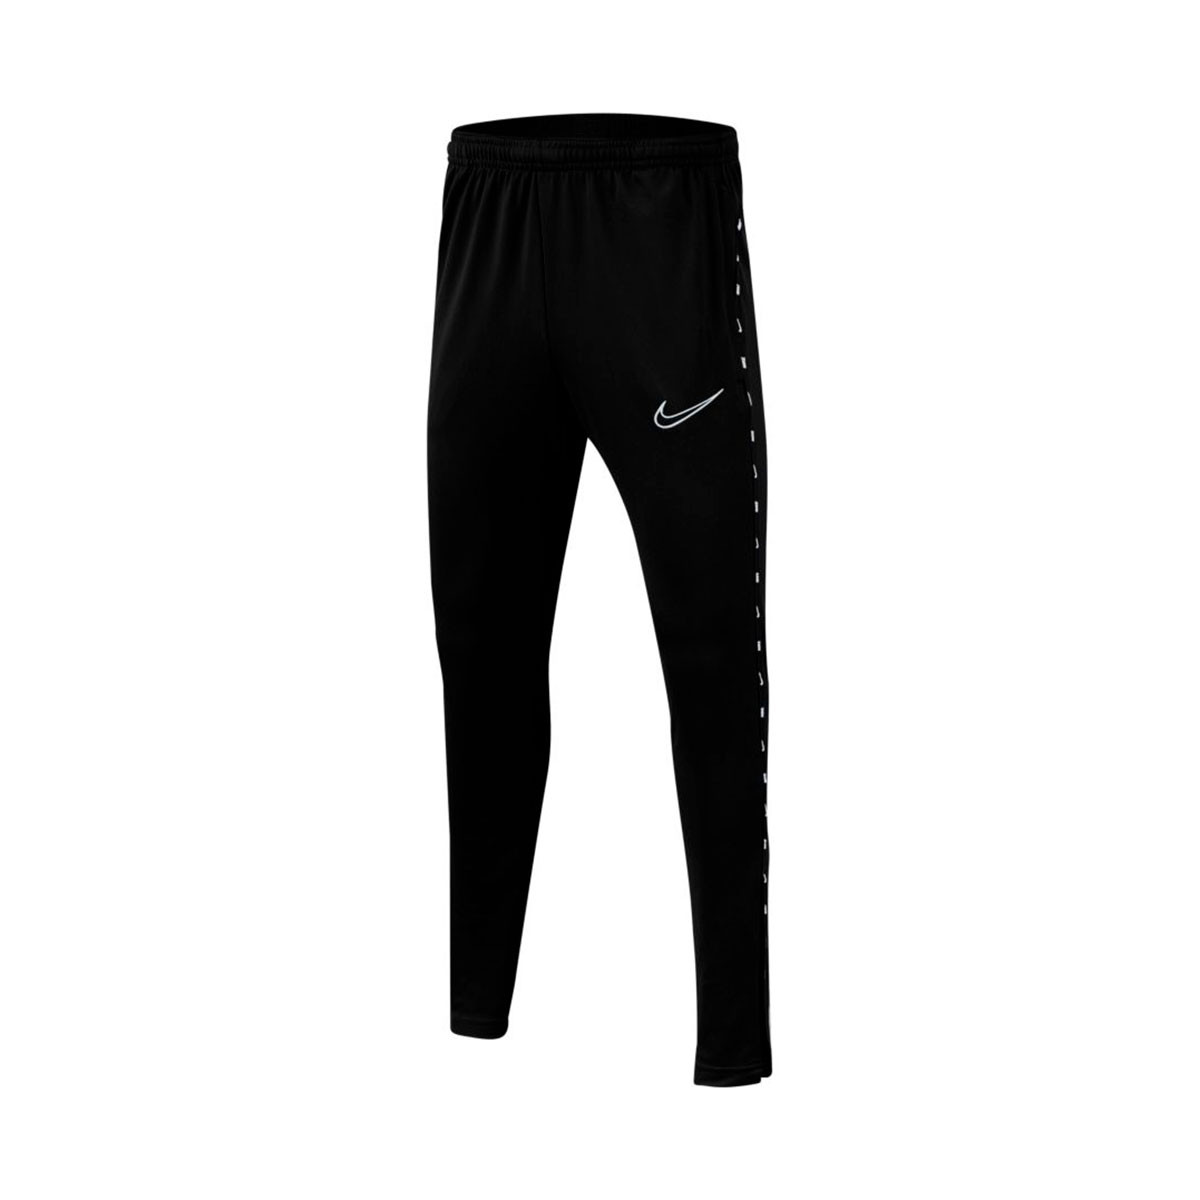 Pantalón largo Nike Dry Kpz Niño Black-White -